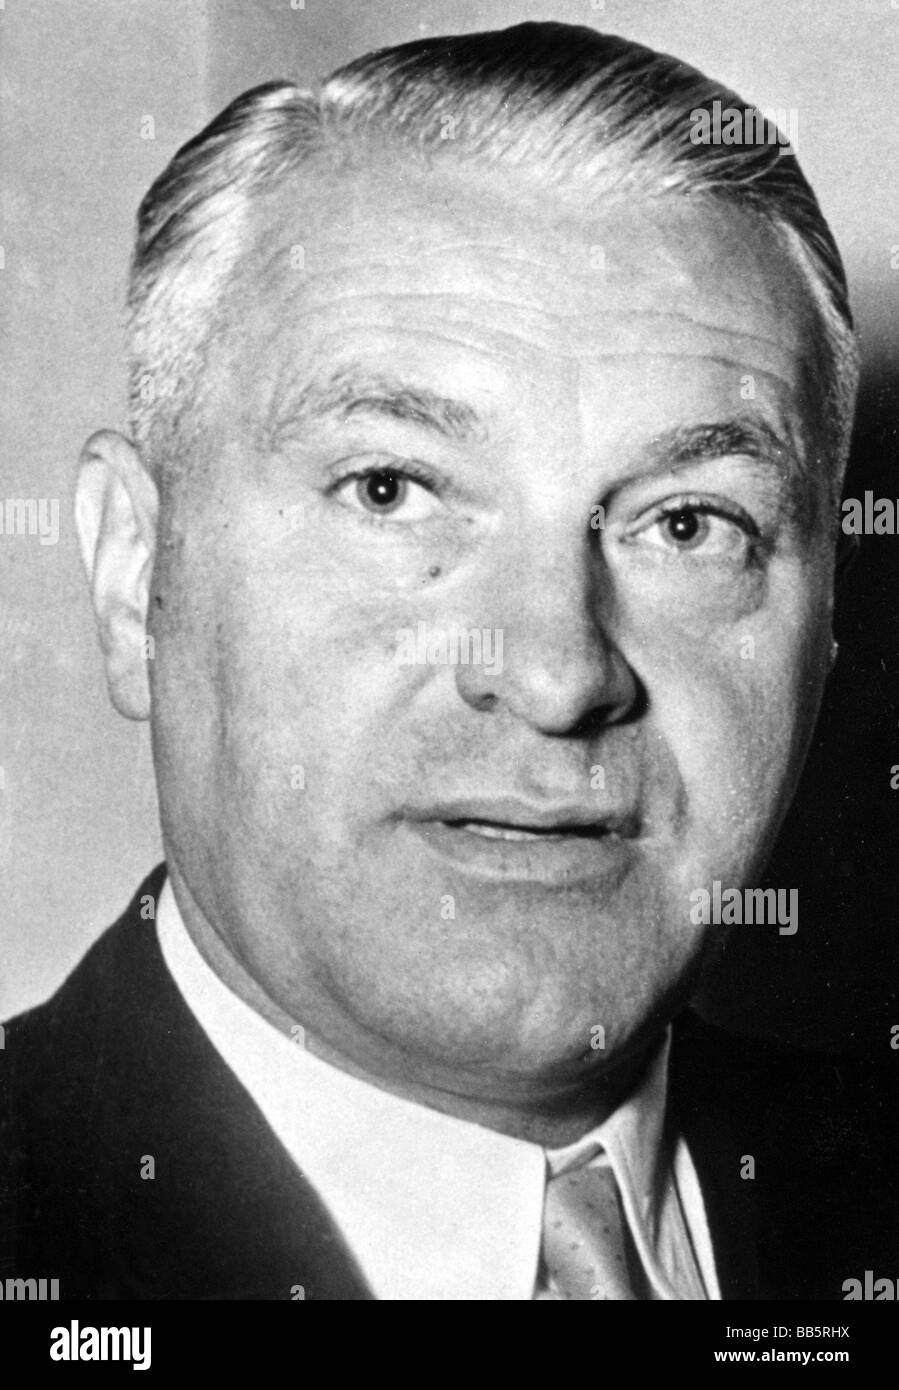 Eberhard, Rudolf, 1.11.1914 - 26.12.1998, German politician (CSU), Bavarian Minister for Finance 1957 - 1964, portrait, 1957, , Stock Photo